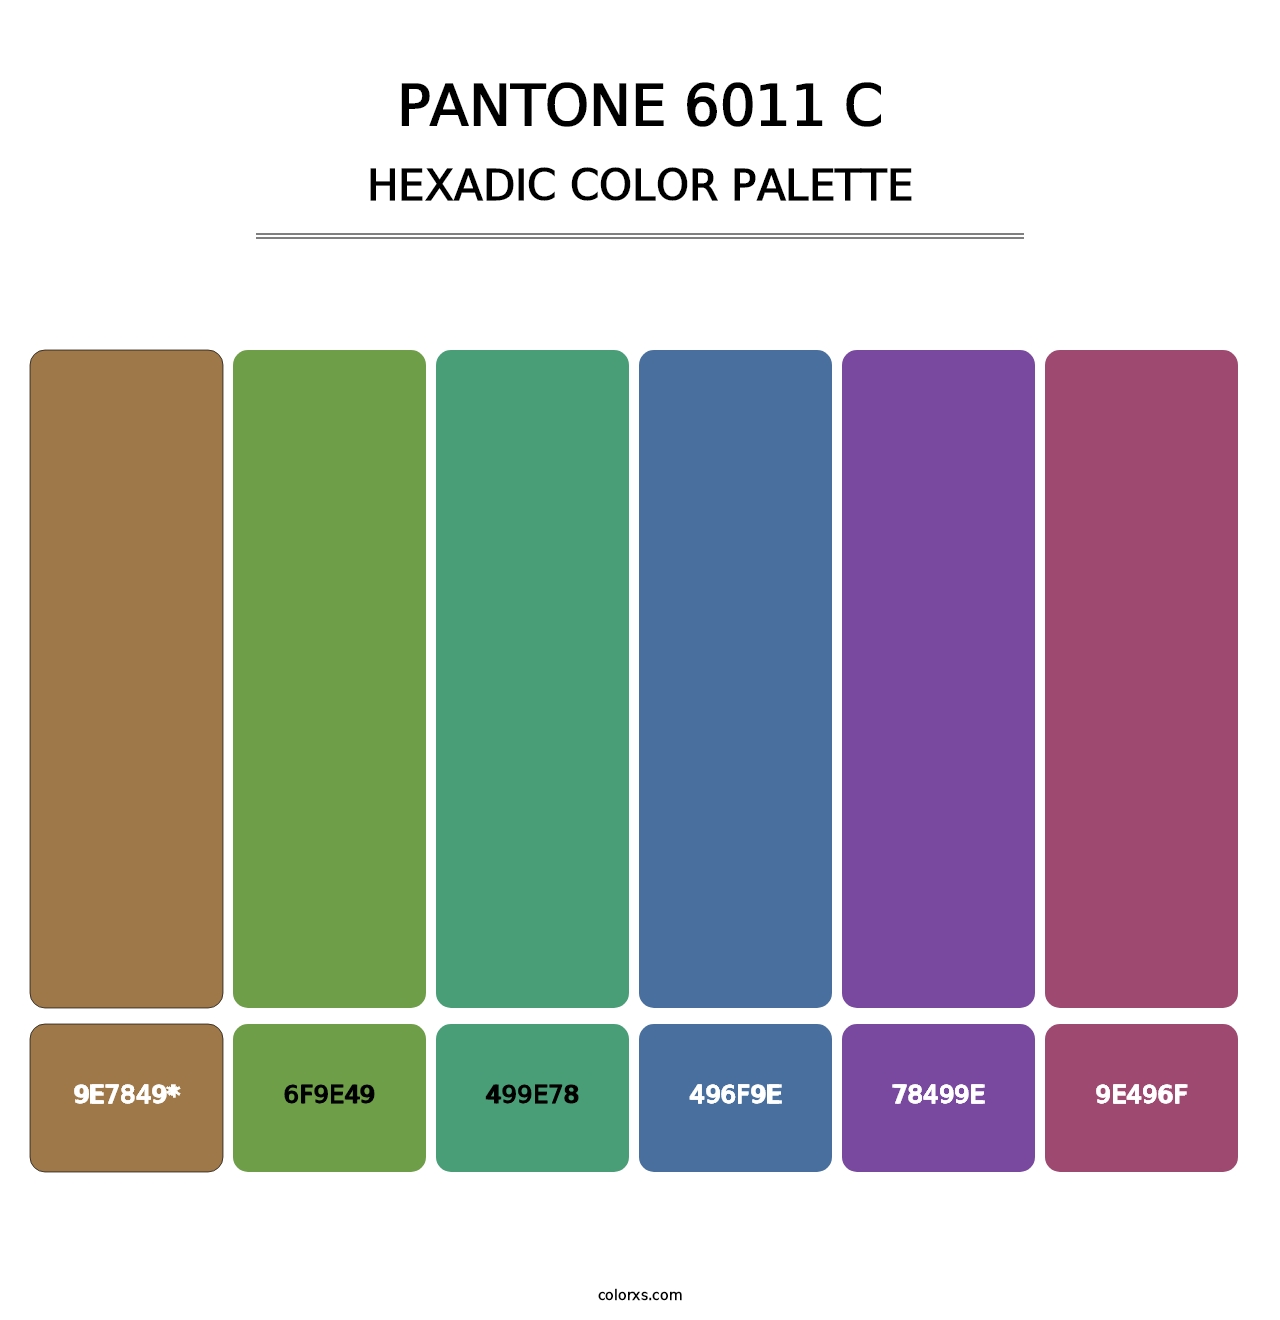 PANTONE 6011 C - Hexadic Color Palette